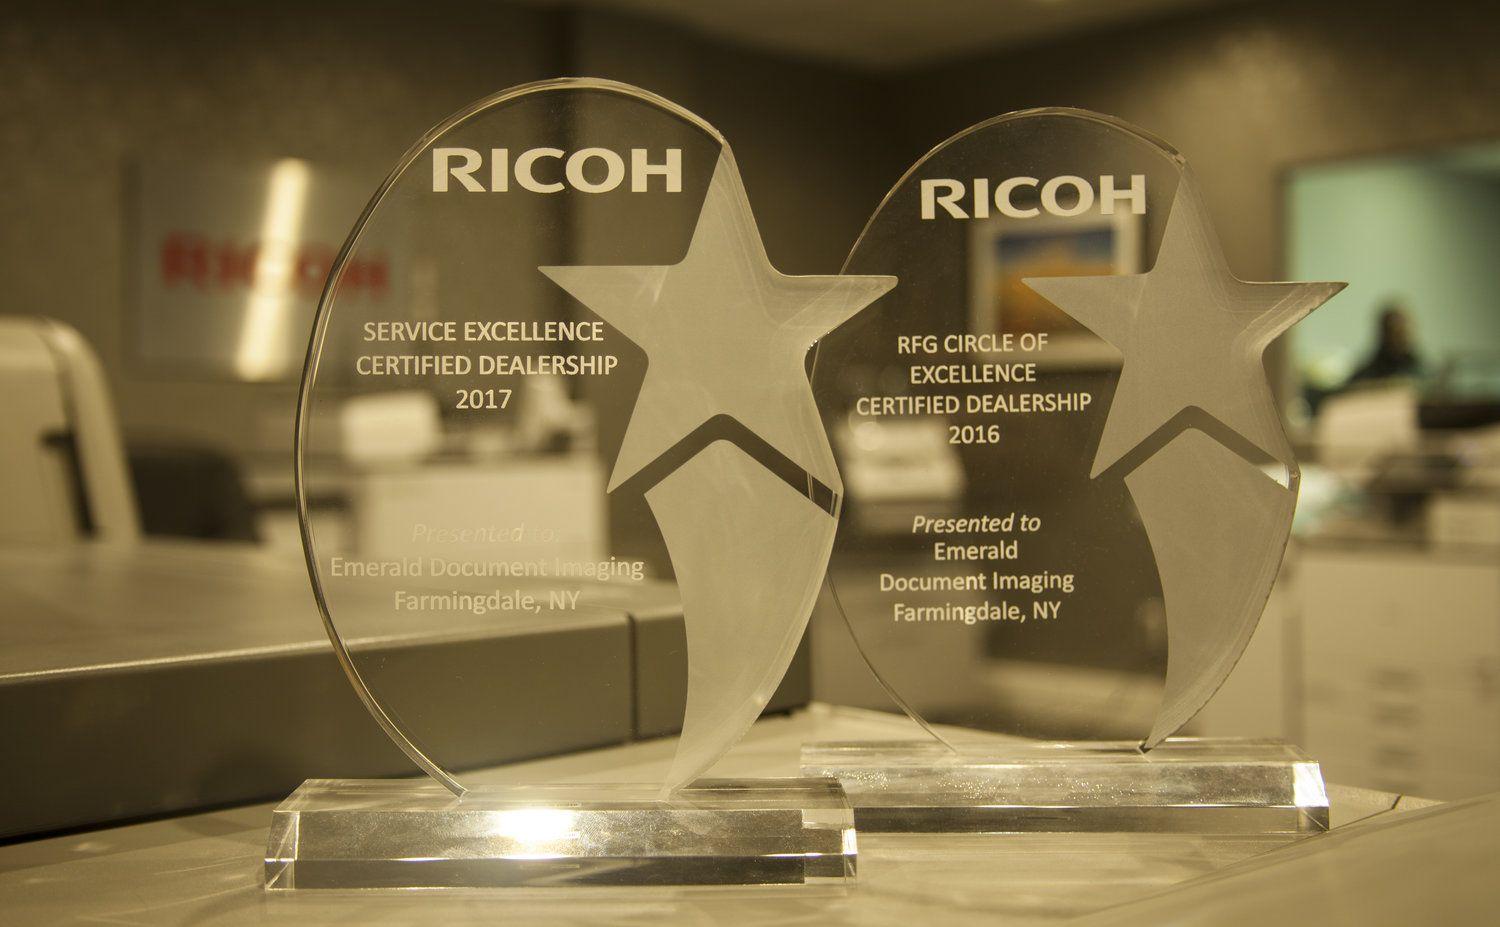 Ricoh Service Excellence Logo - Emerald Wins Ricoh's Service Excellence Award Two Years in a Row ...